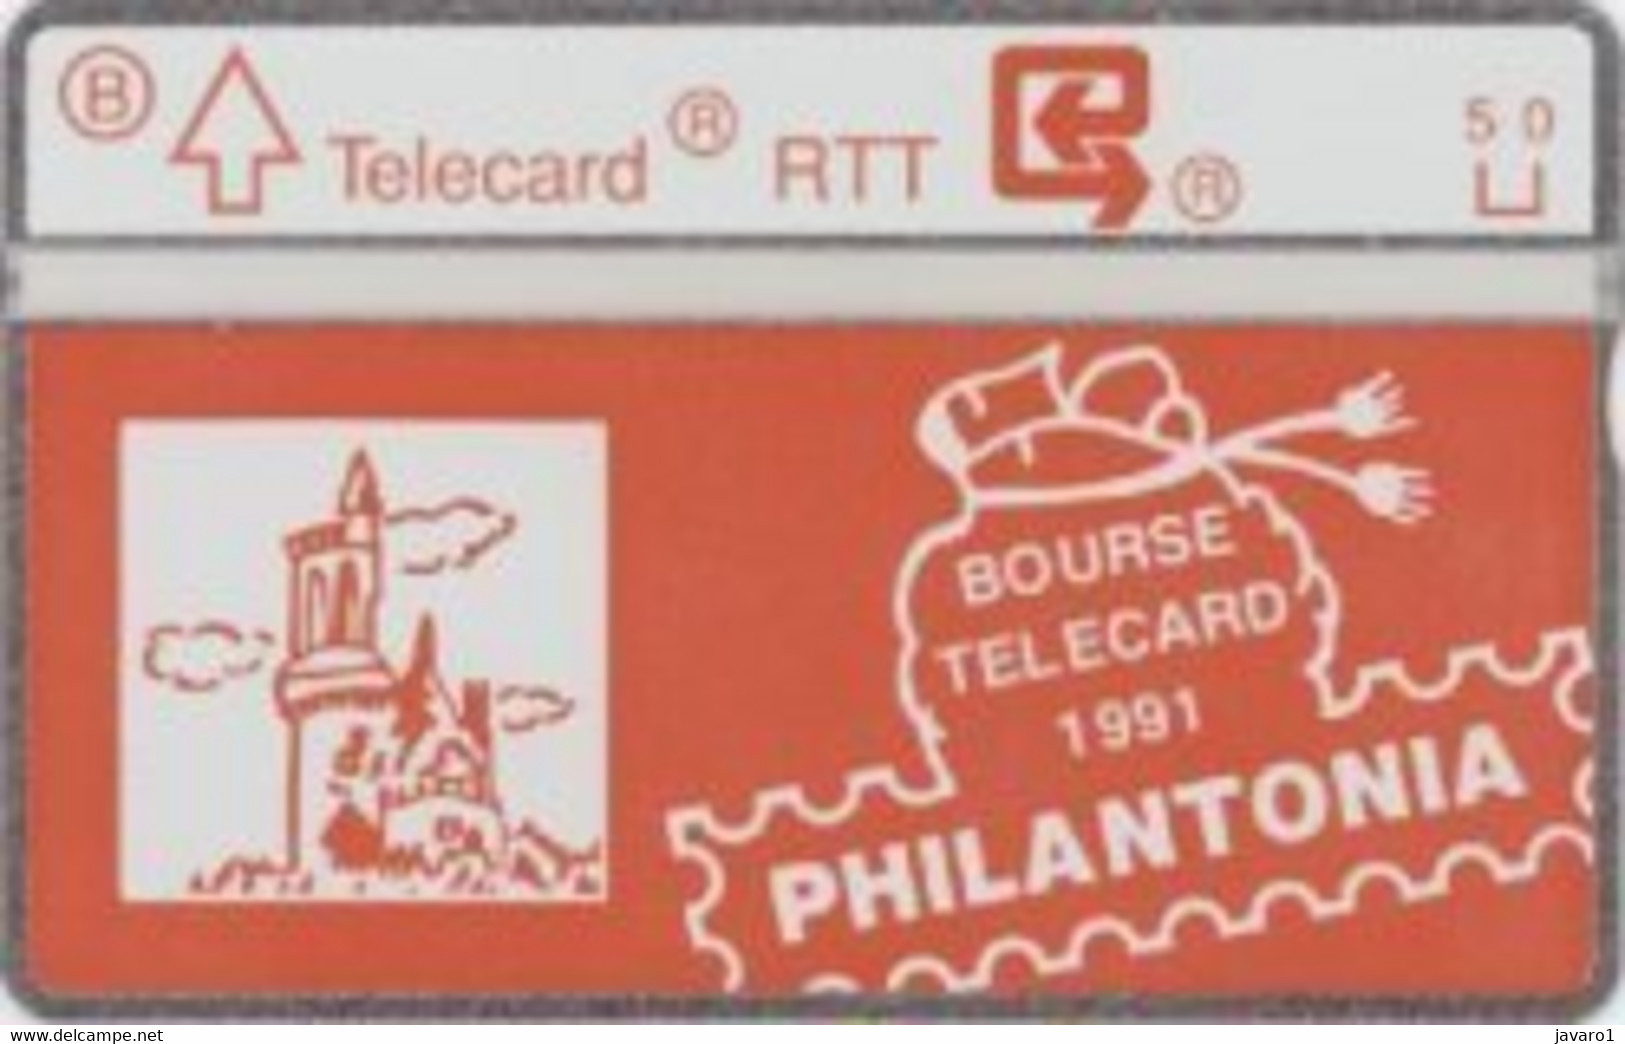 1991 : P071 PHILANTONIA MINT - Senza Chip